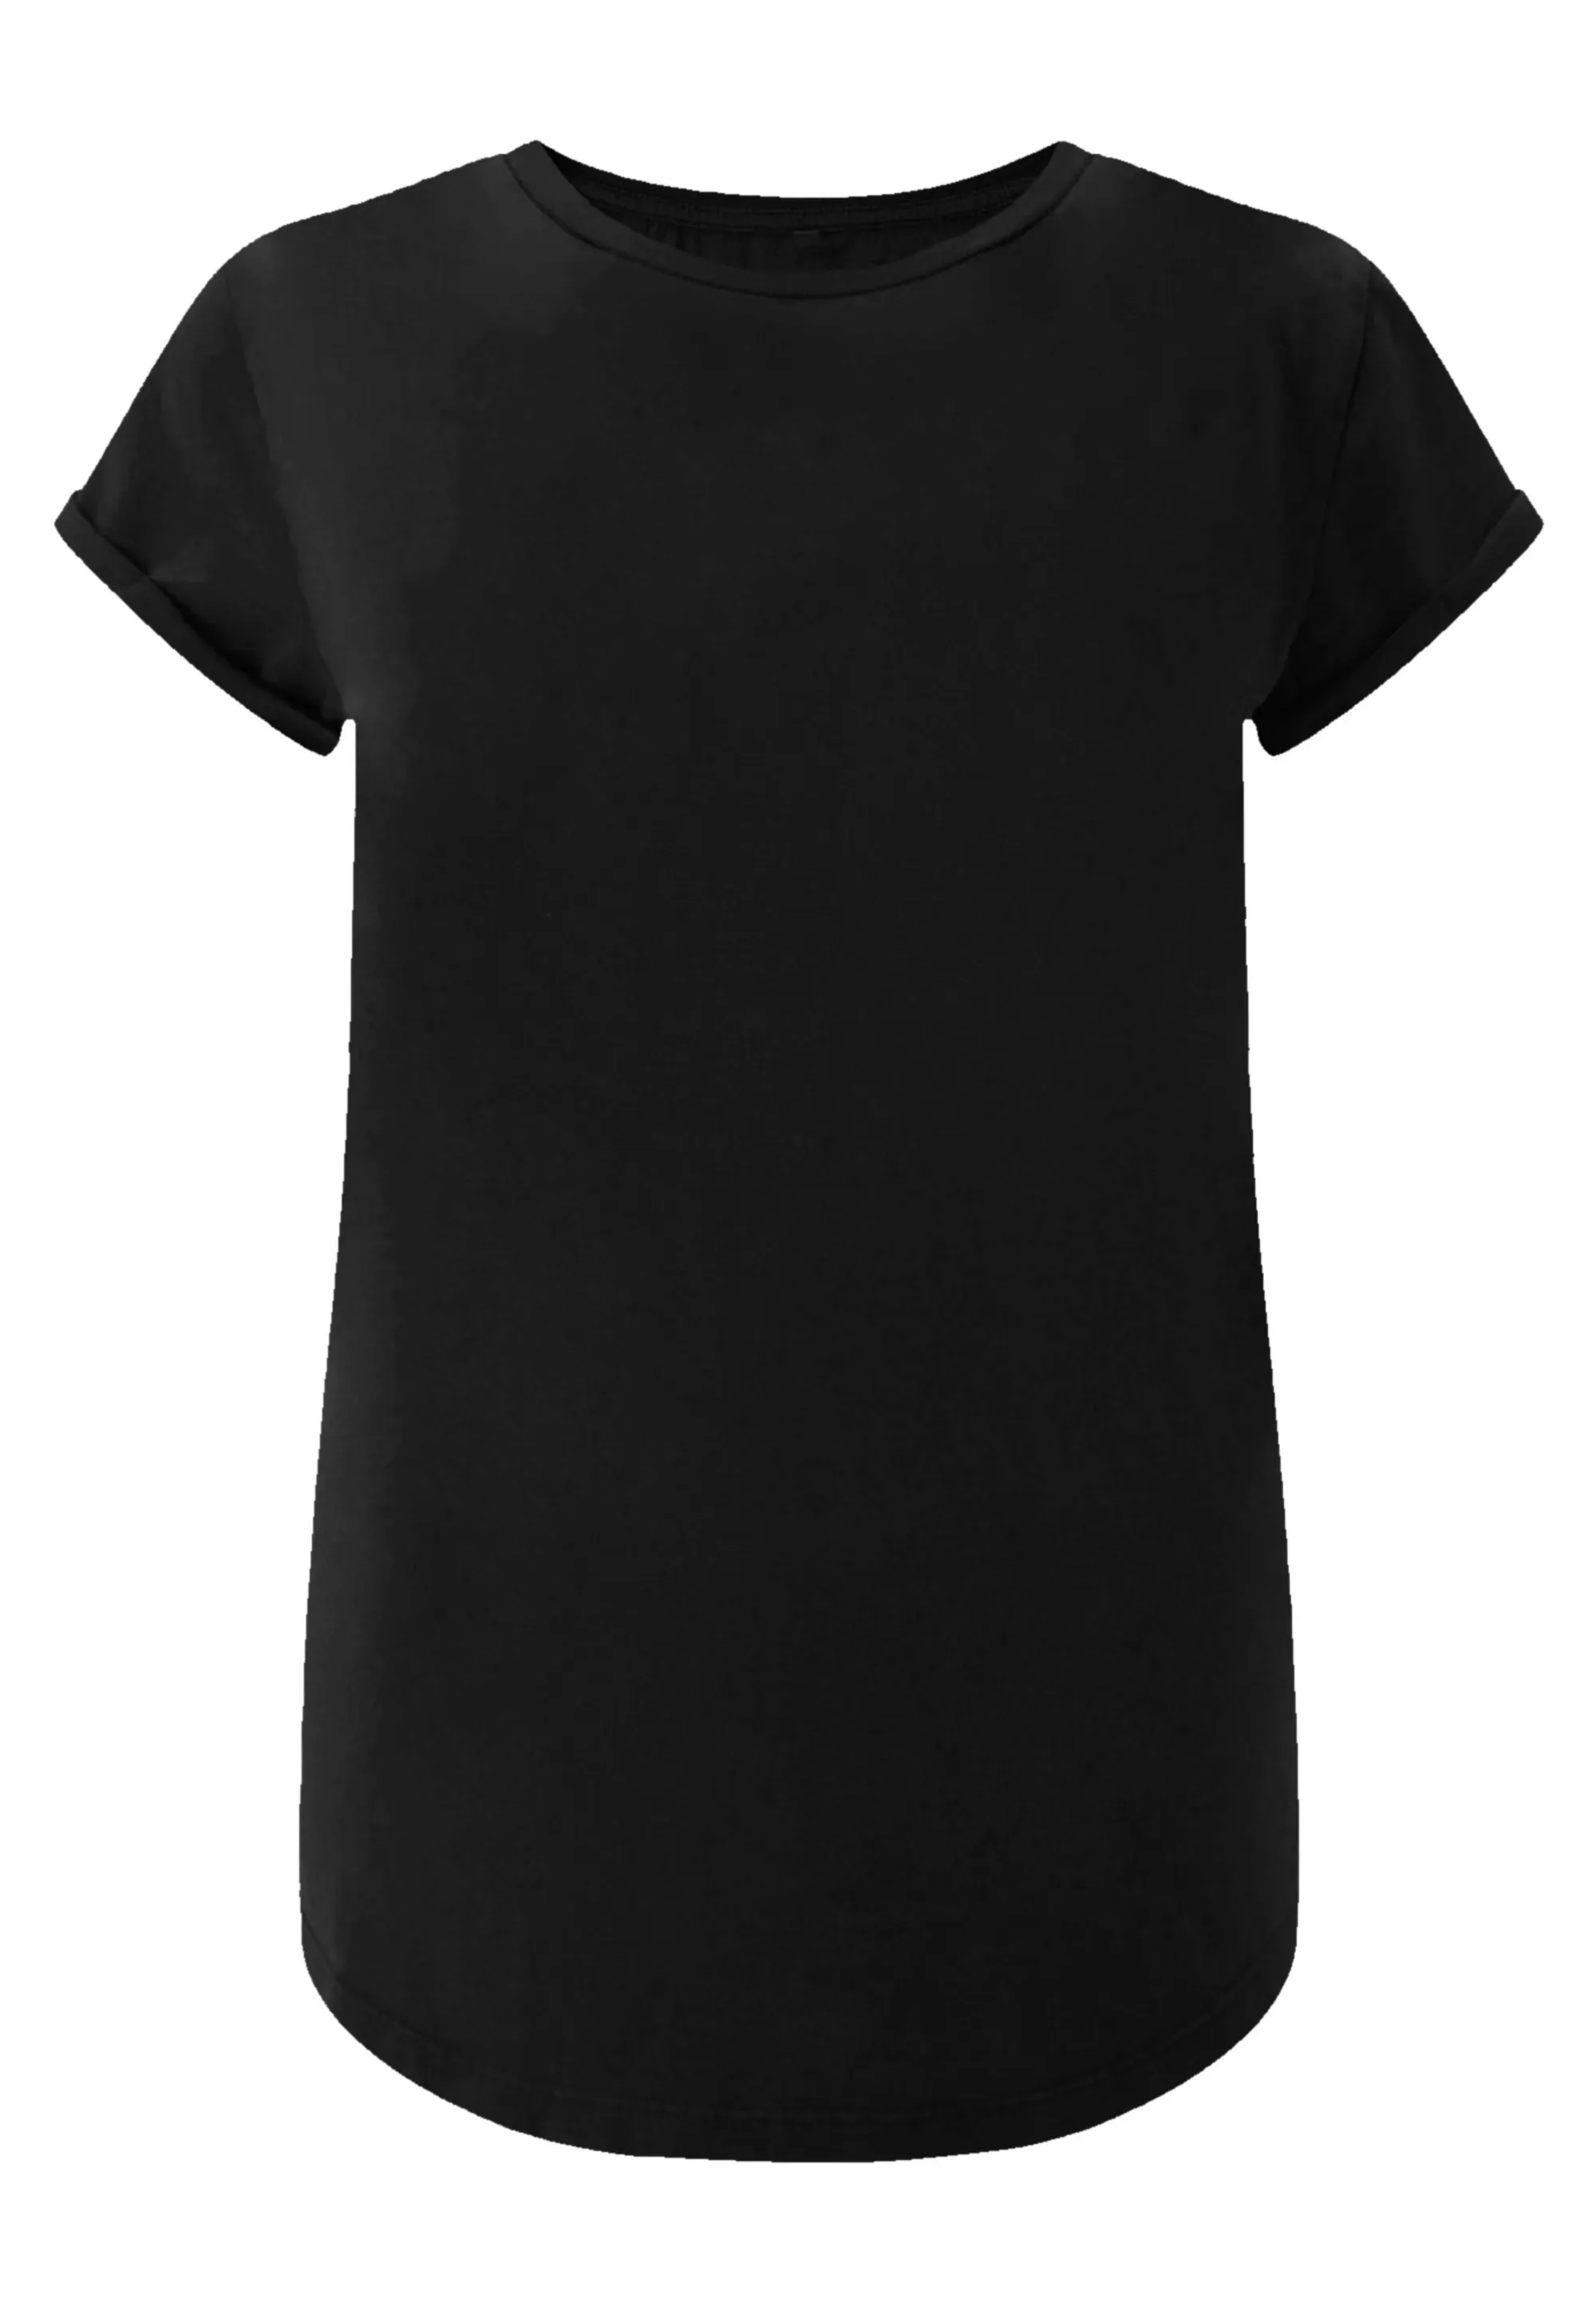 F4NT4STIC T-Shirt "Tupac Shakur Praying" günstig online kaufen